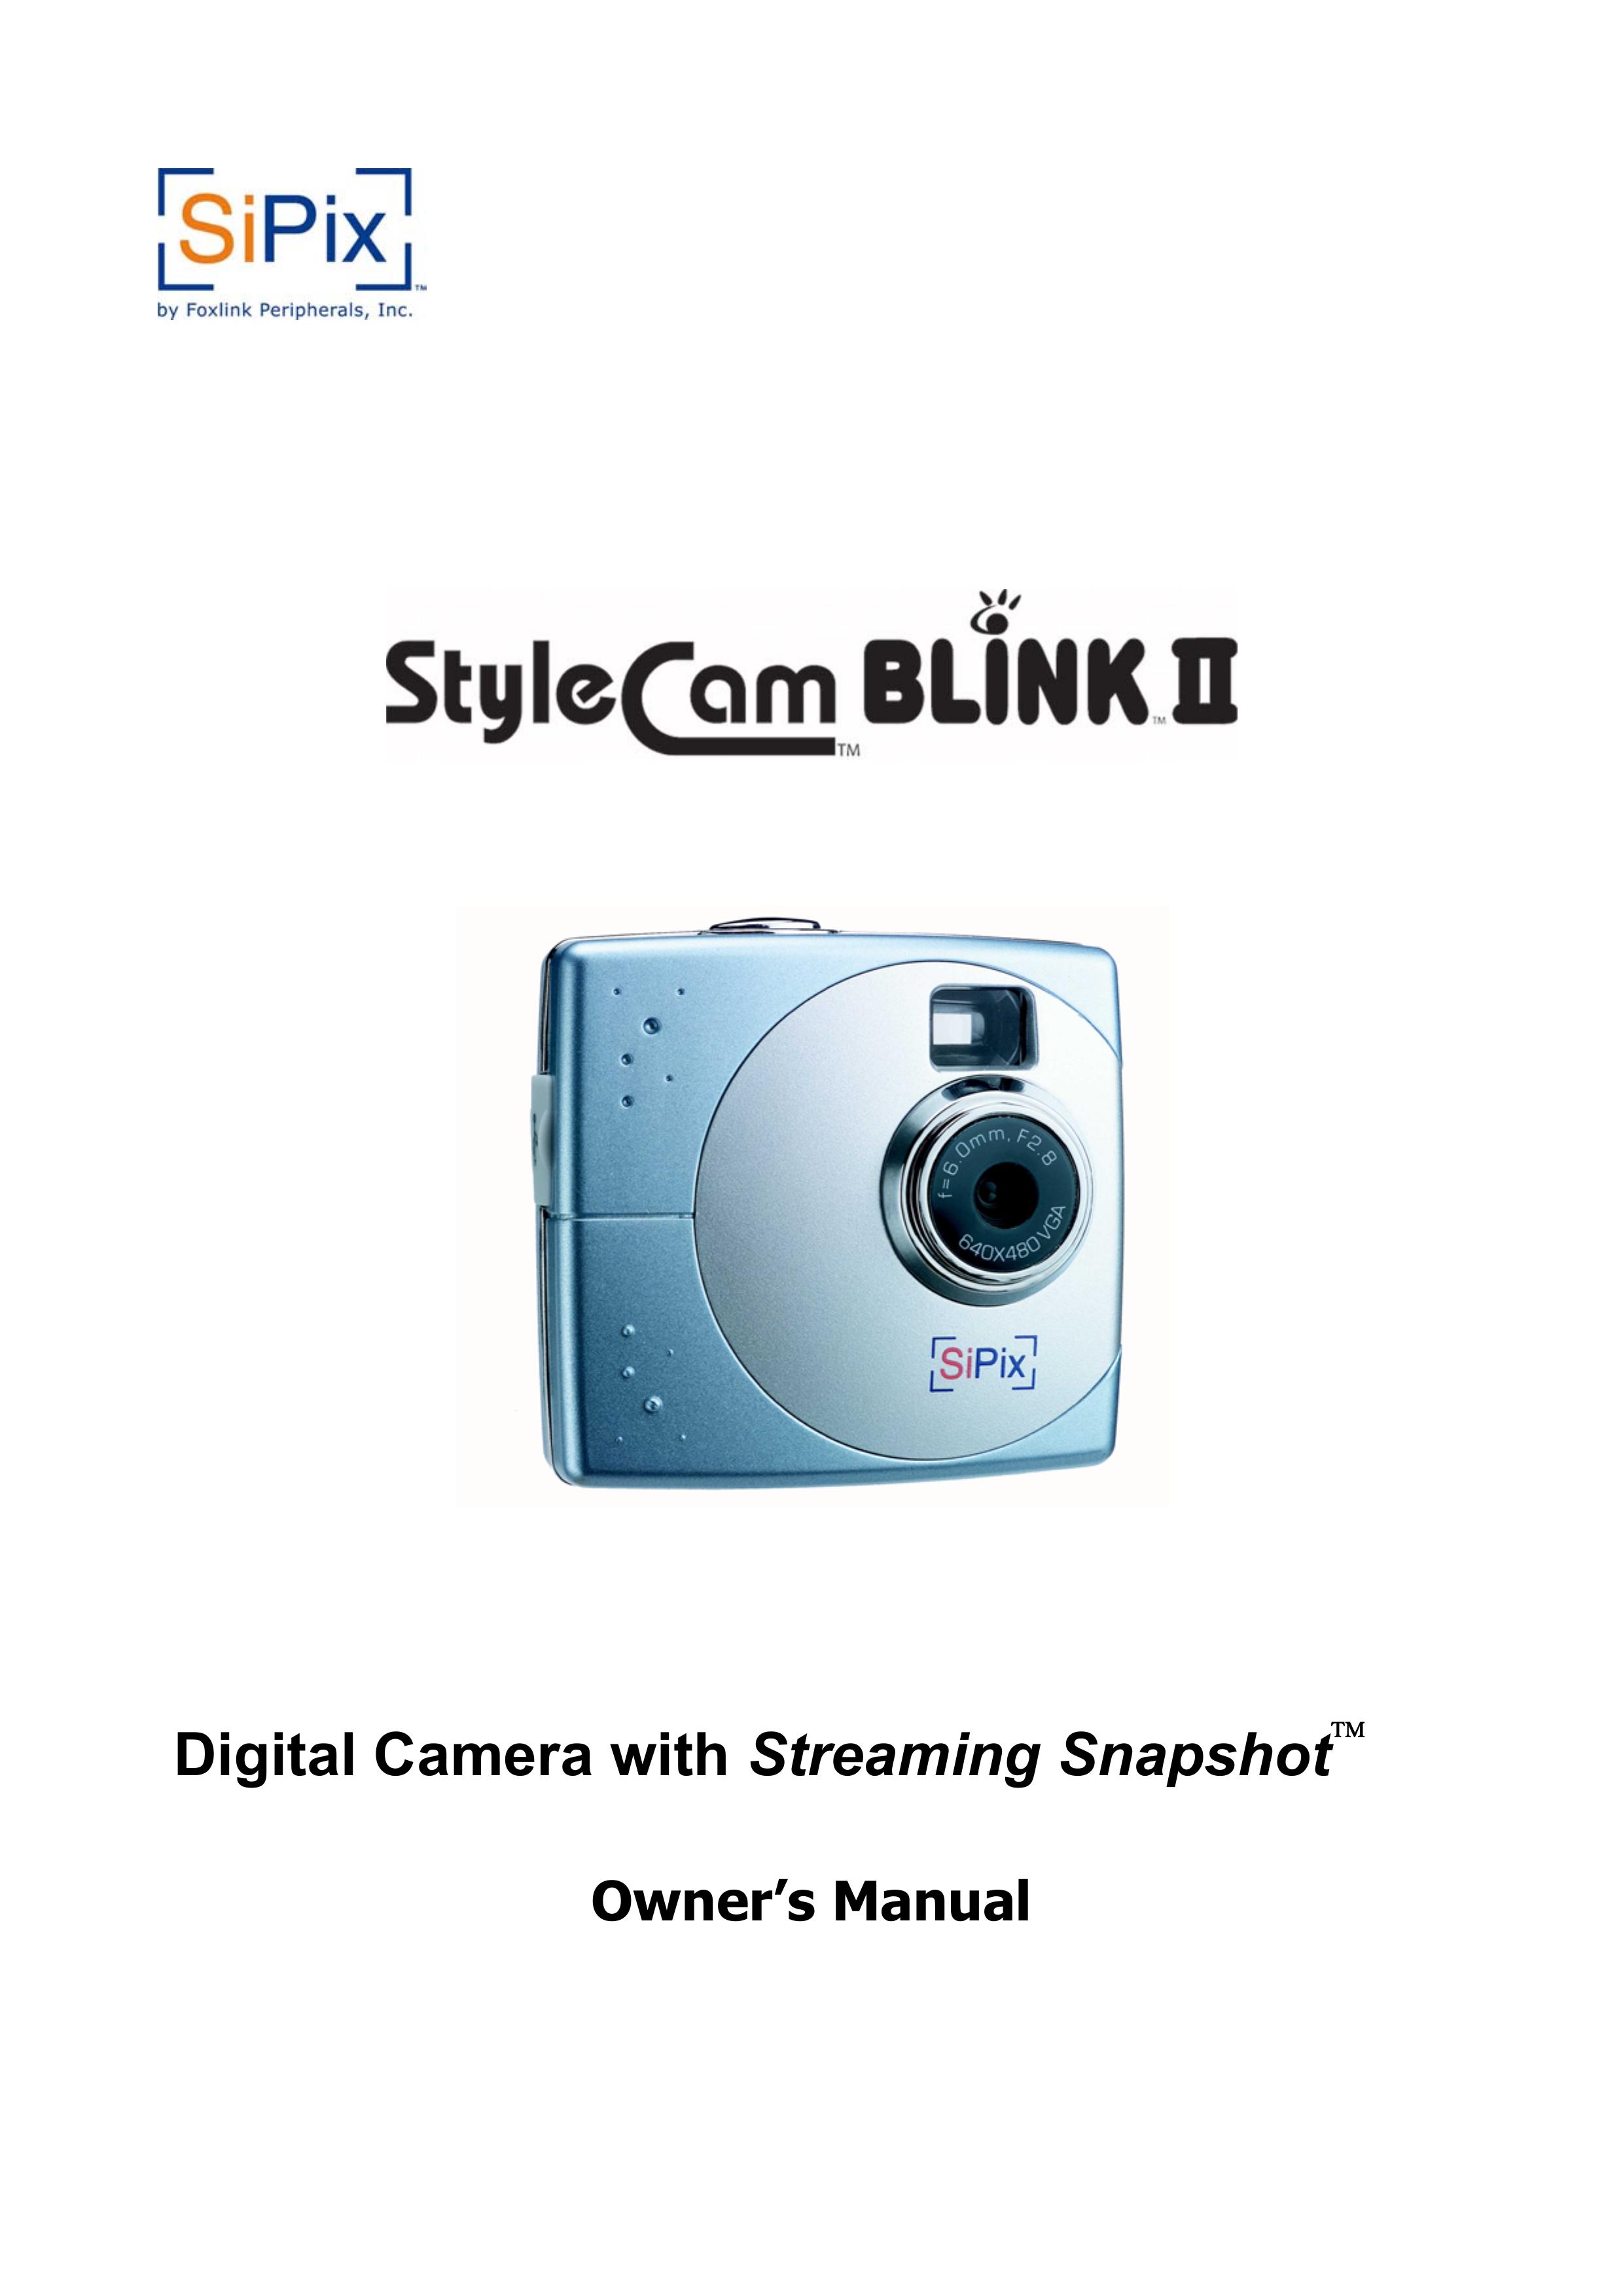 SiPix Blink Digital Camera User Manual